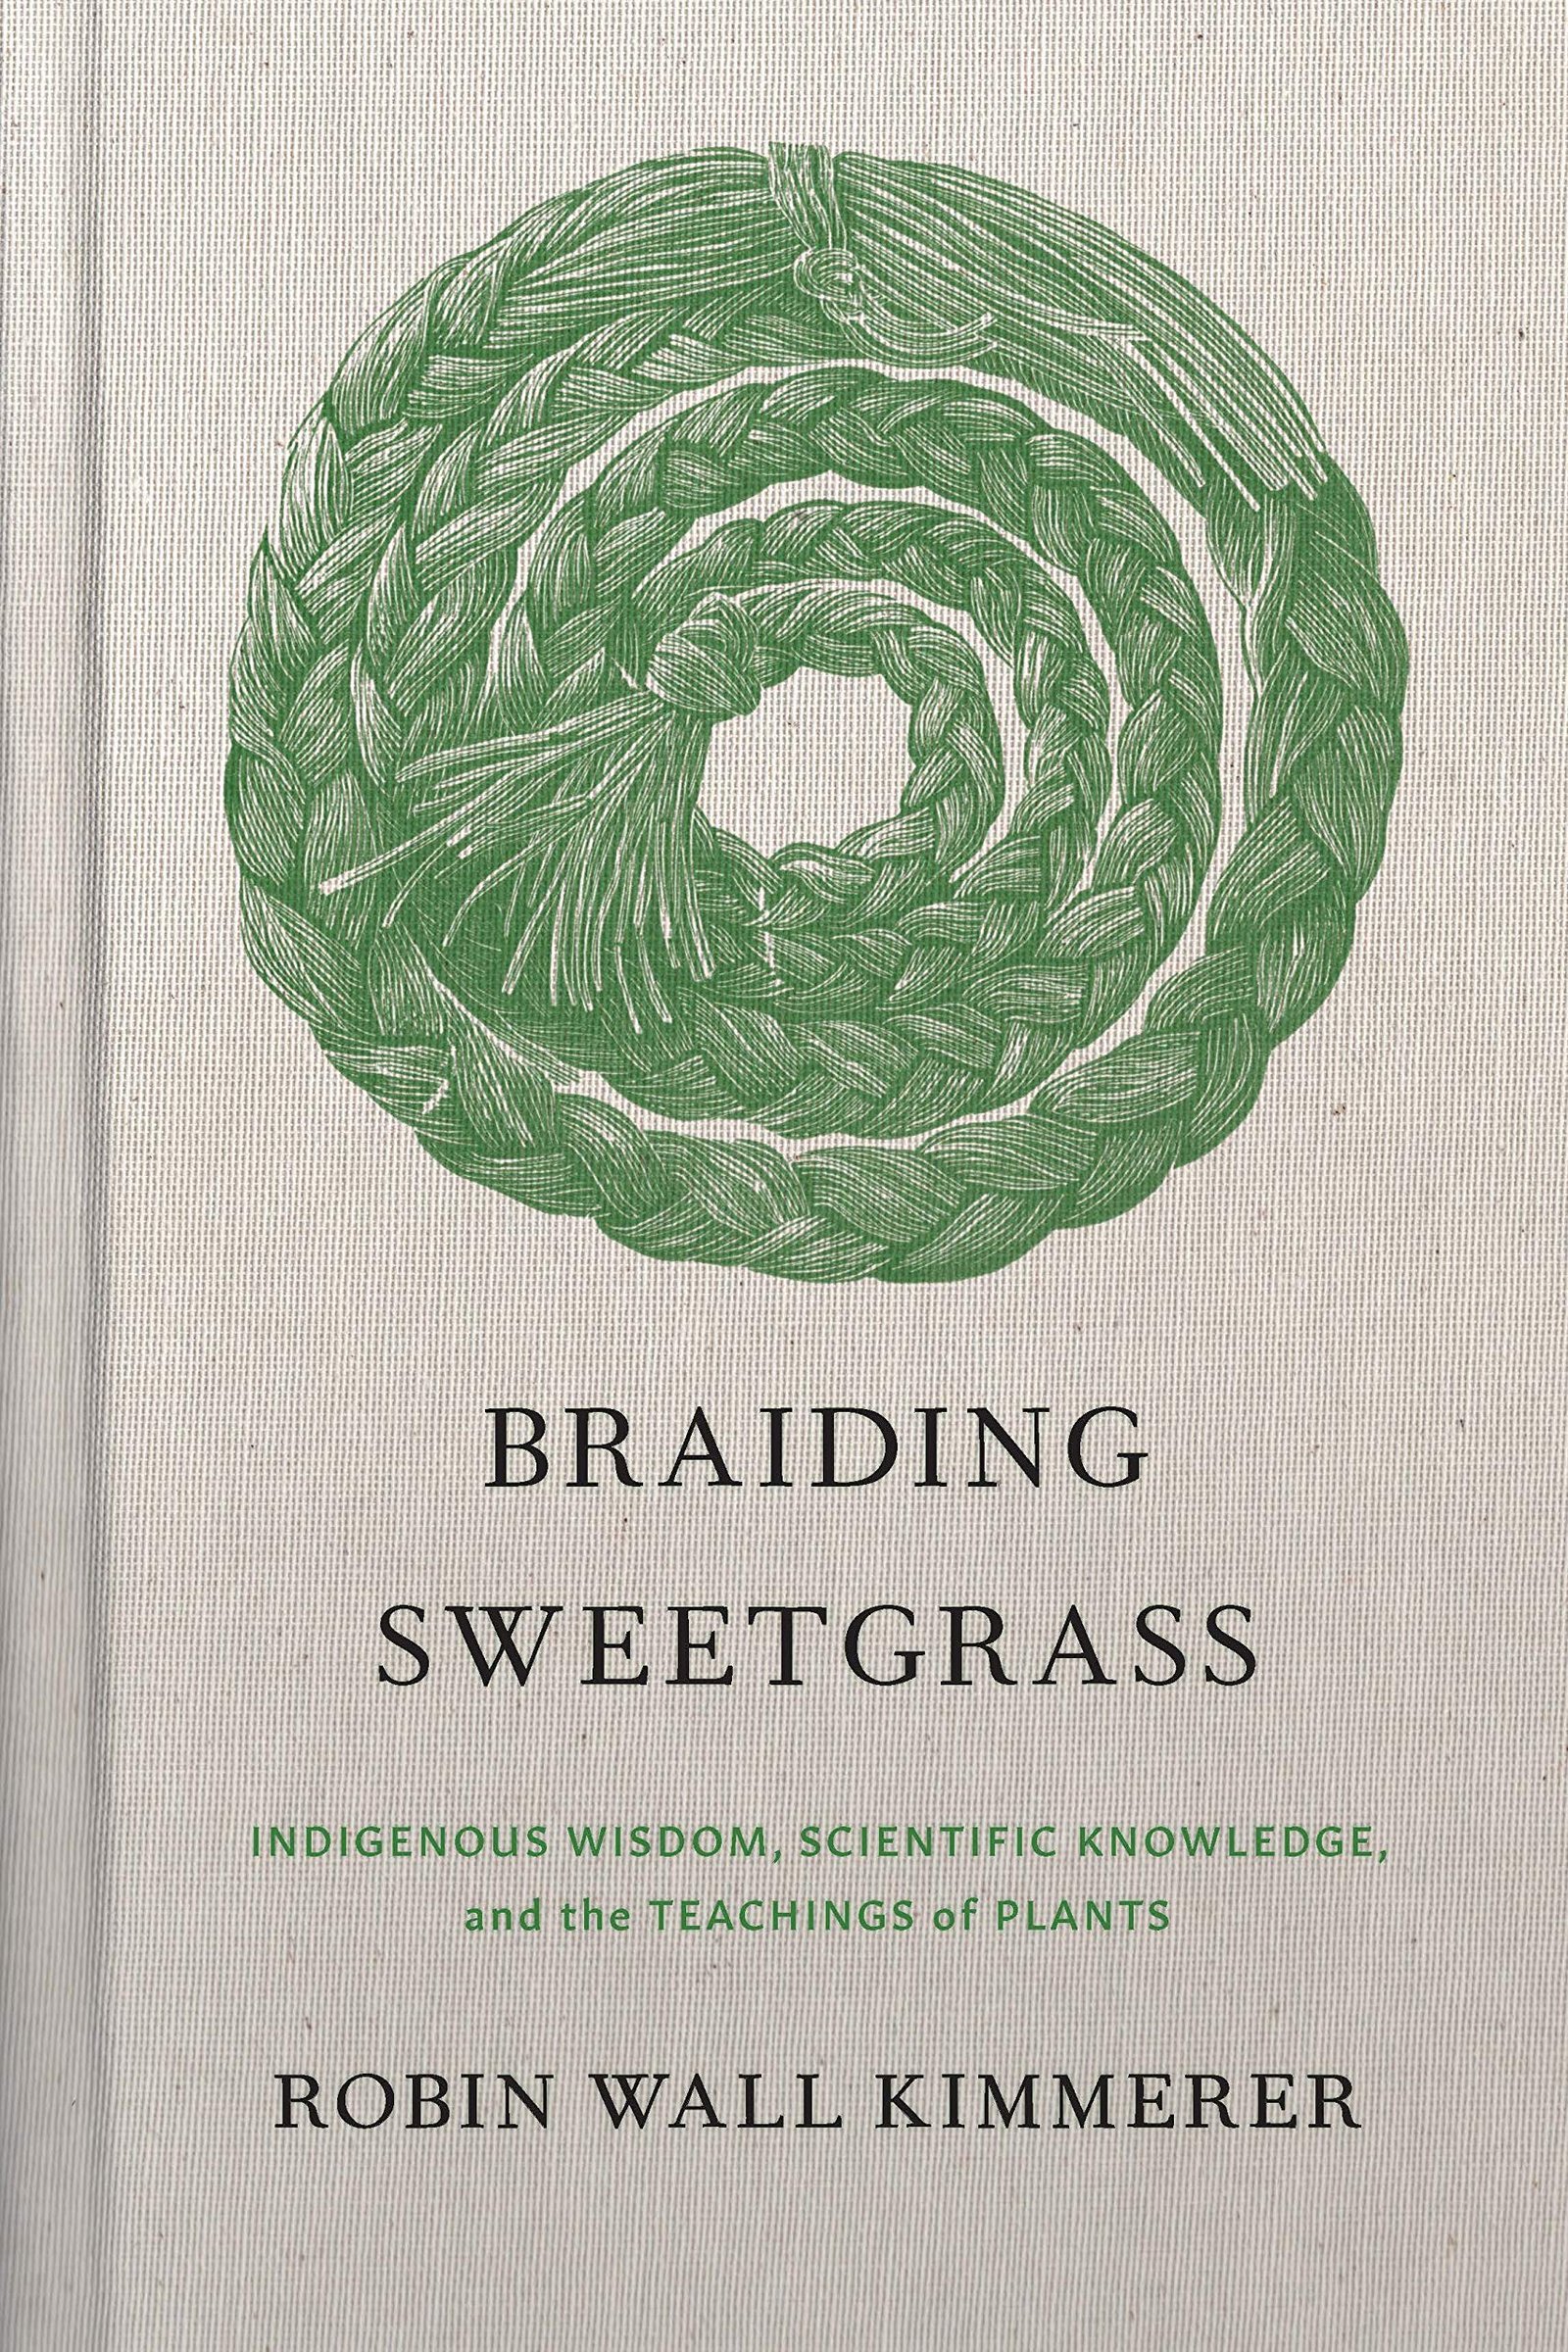 Braiding Sweetgrass PDF